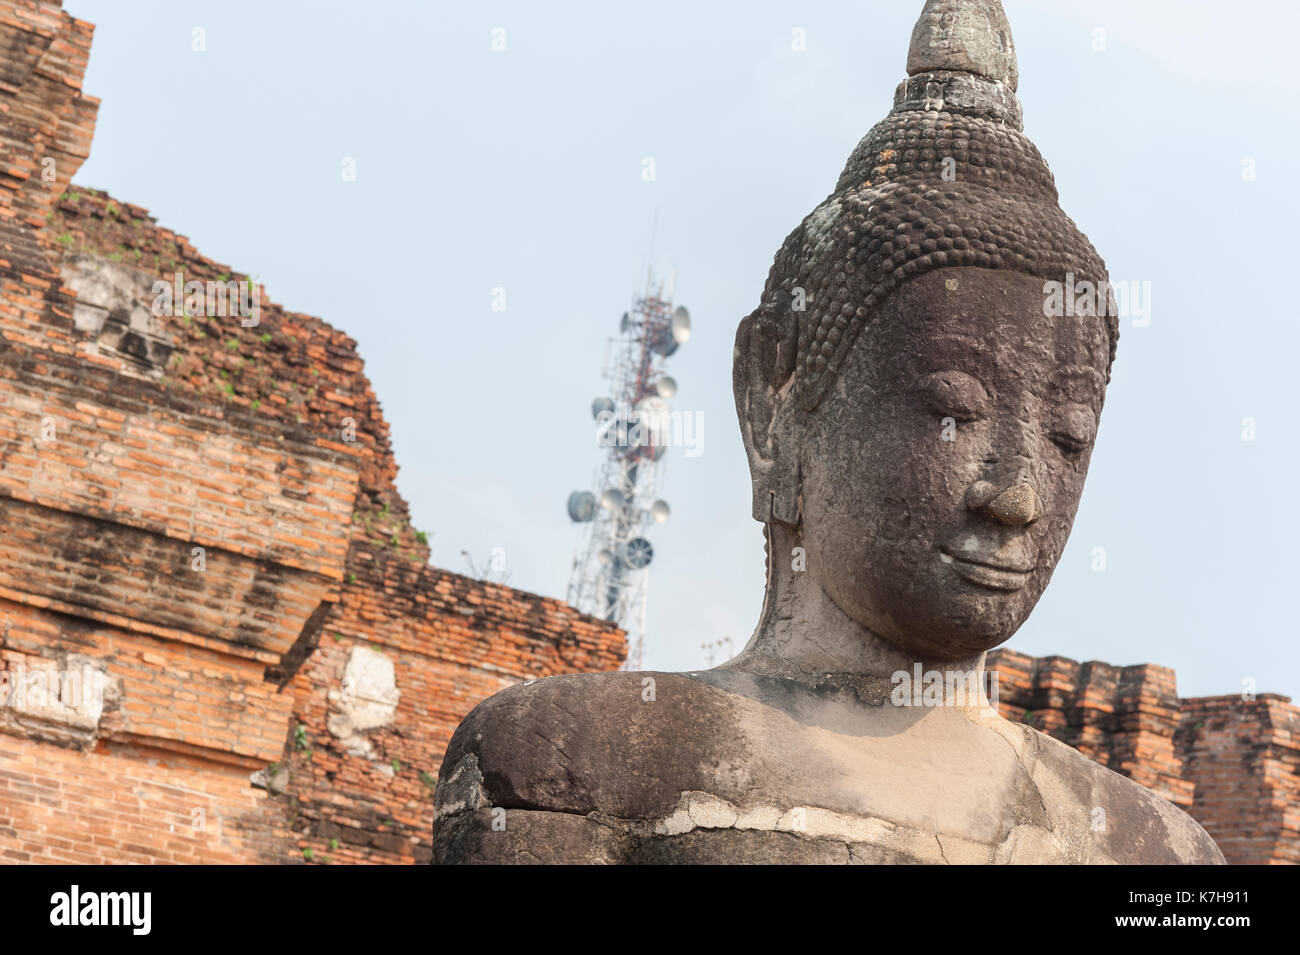 Estatua de Buda y torre satélite en Wat Mahathat (Templo de la Gran reliquia), Ayutthaya, Tailandia. Foto de stock